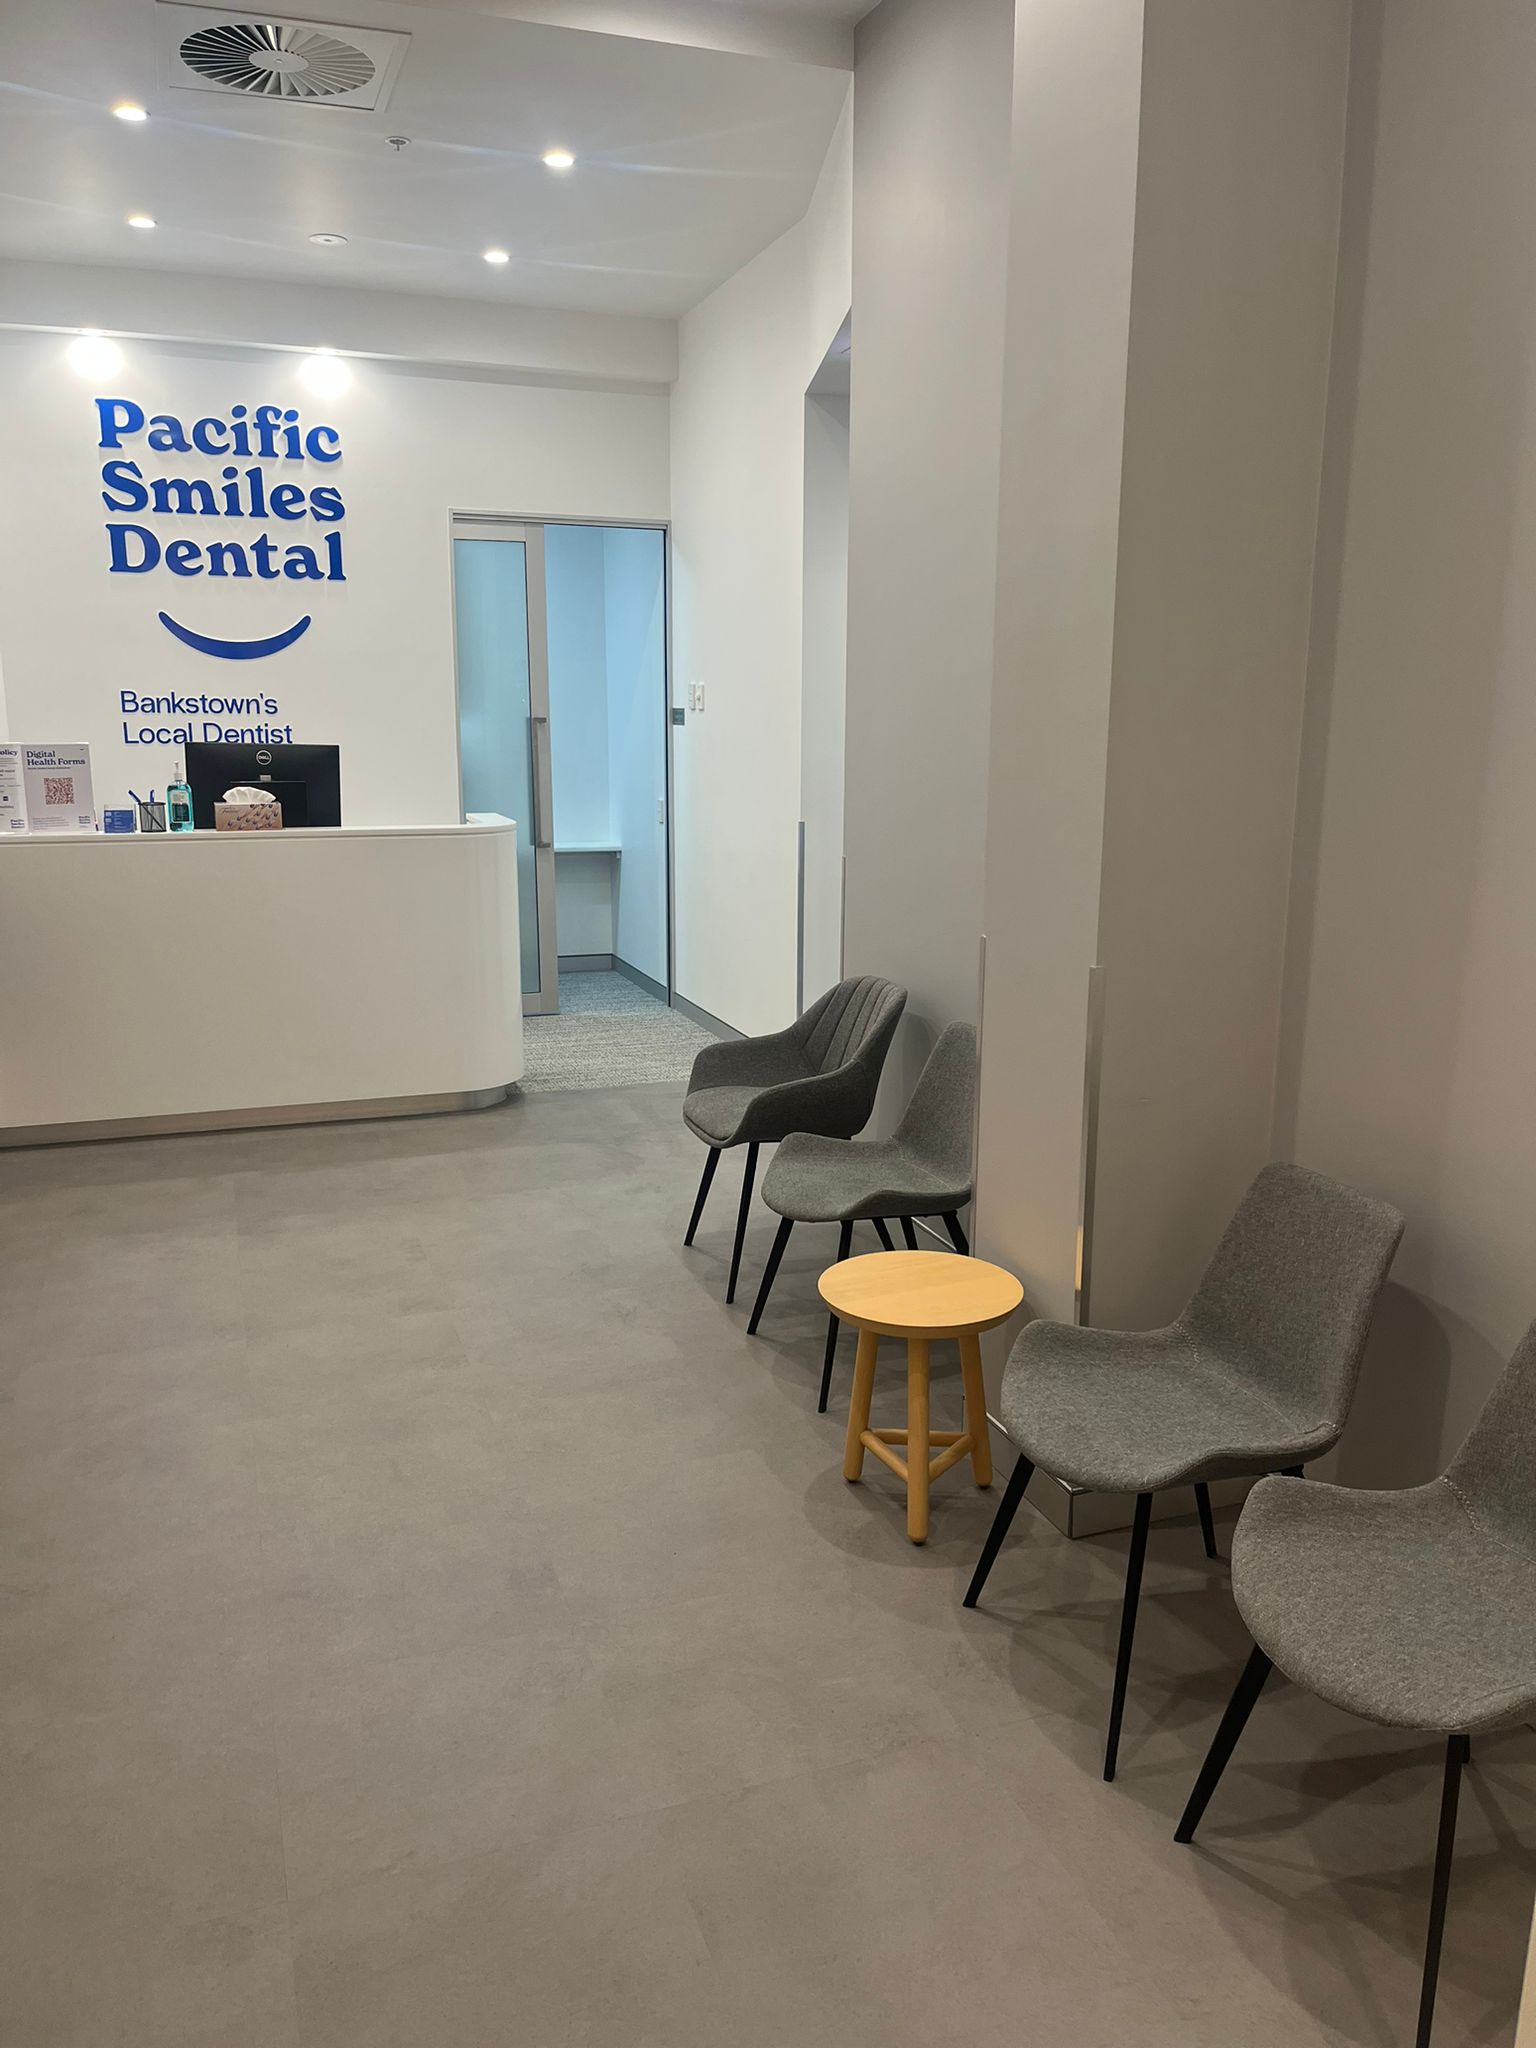 Images Pacific Smiles Dental Bankstown